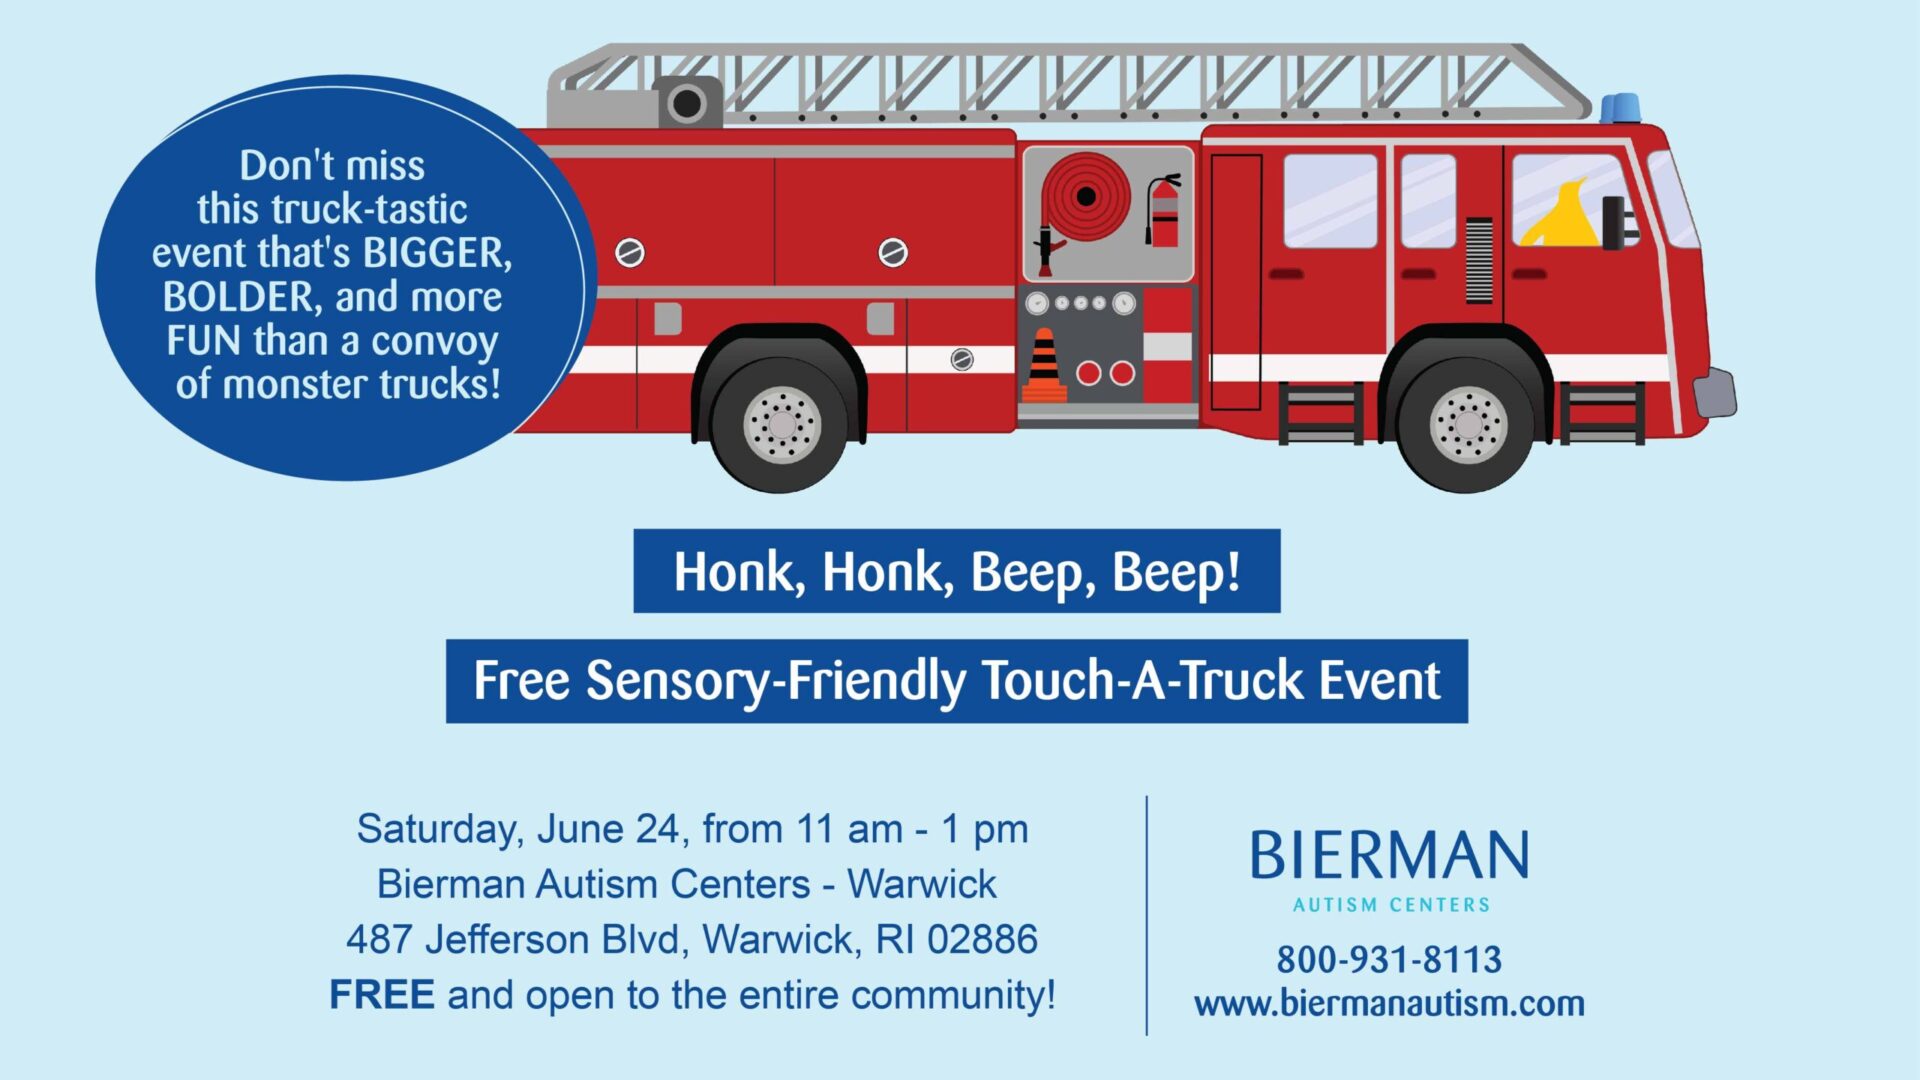 Bierman Autism Centers hosts a Touch-A-Truck bonanza June 24.